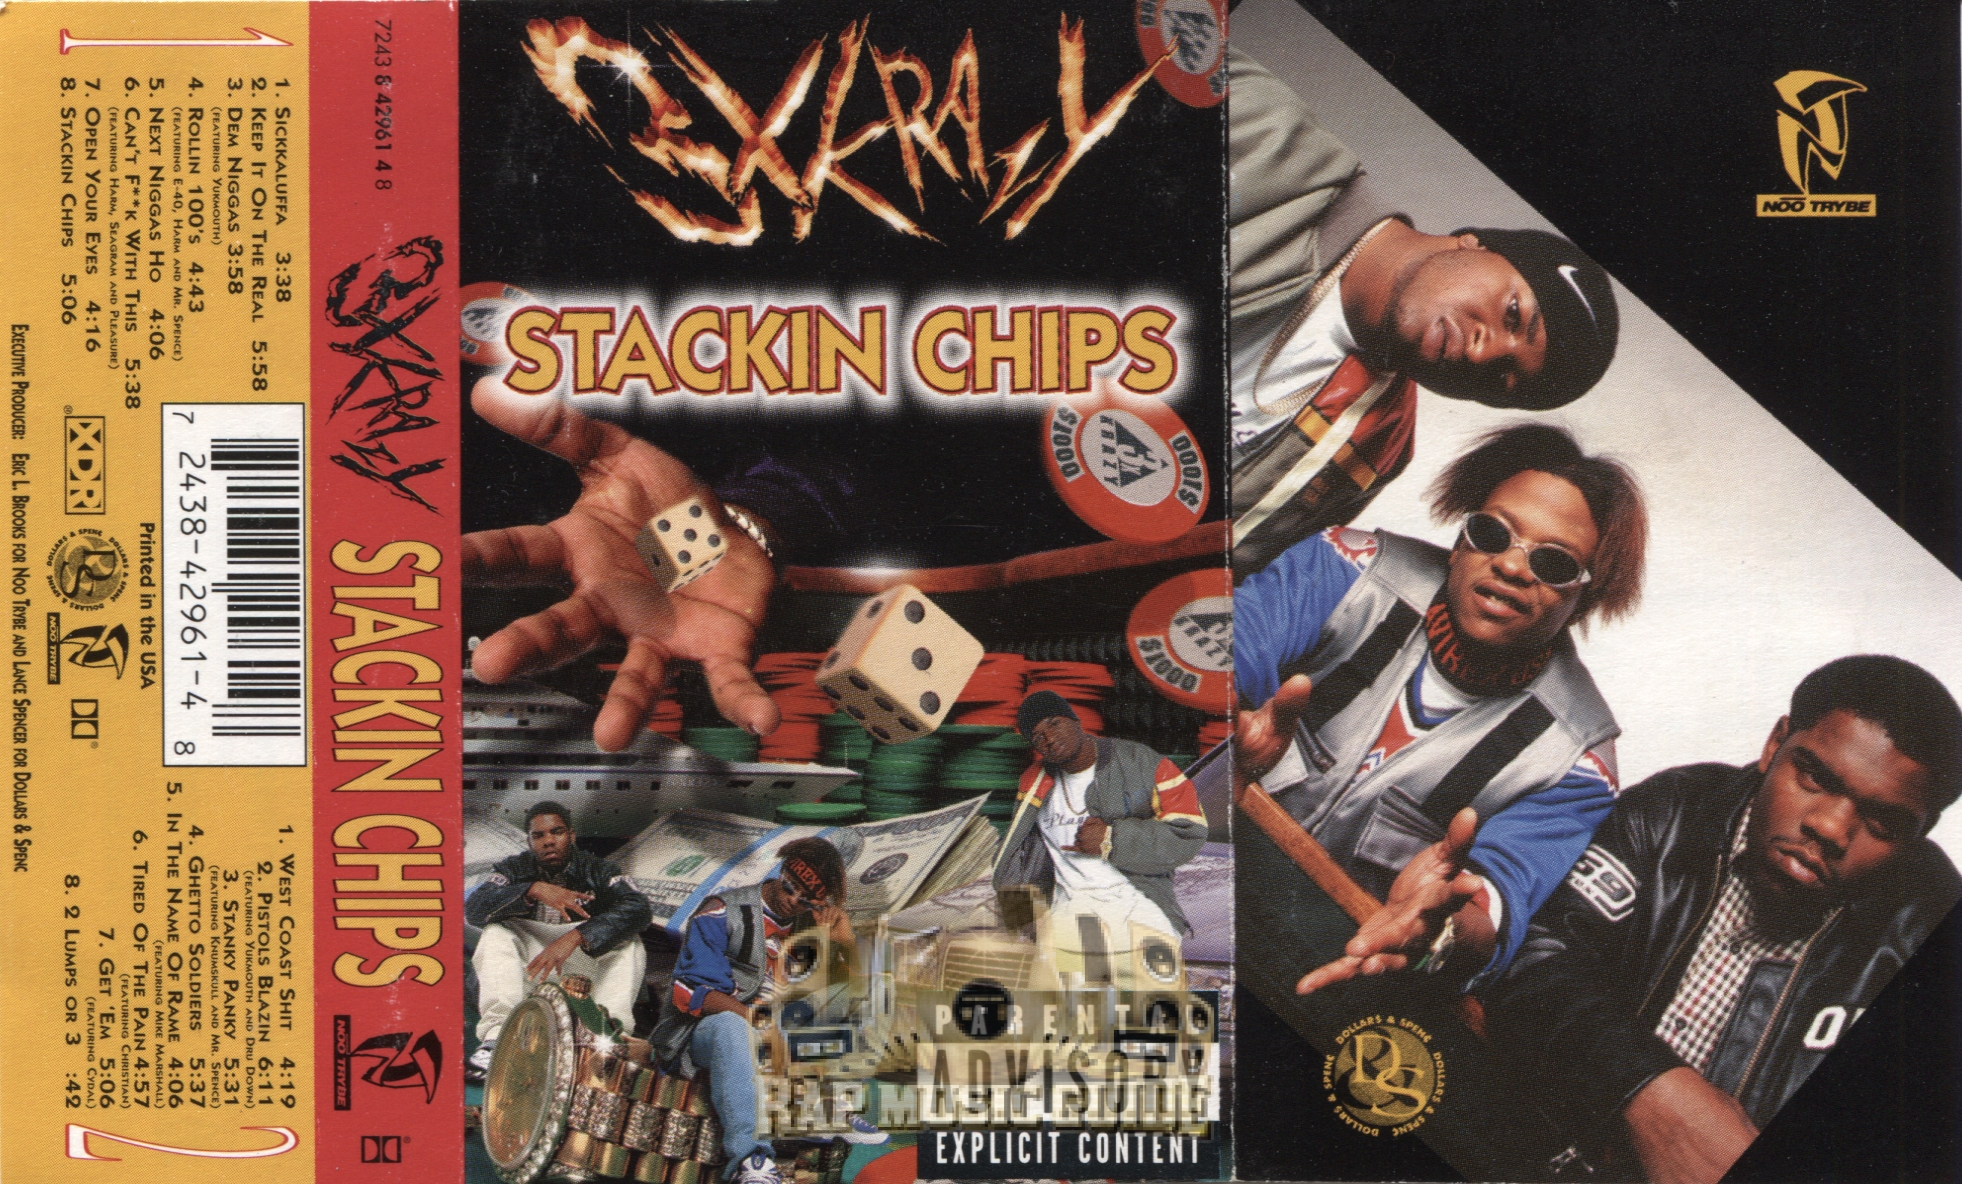 3X Krazy - Stackin Chips: Cassette Tape | Rap Music Guide